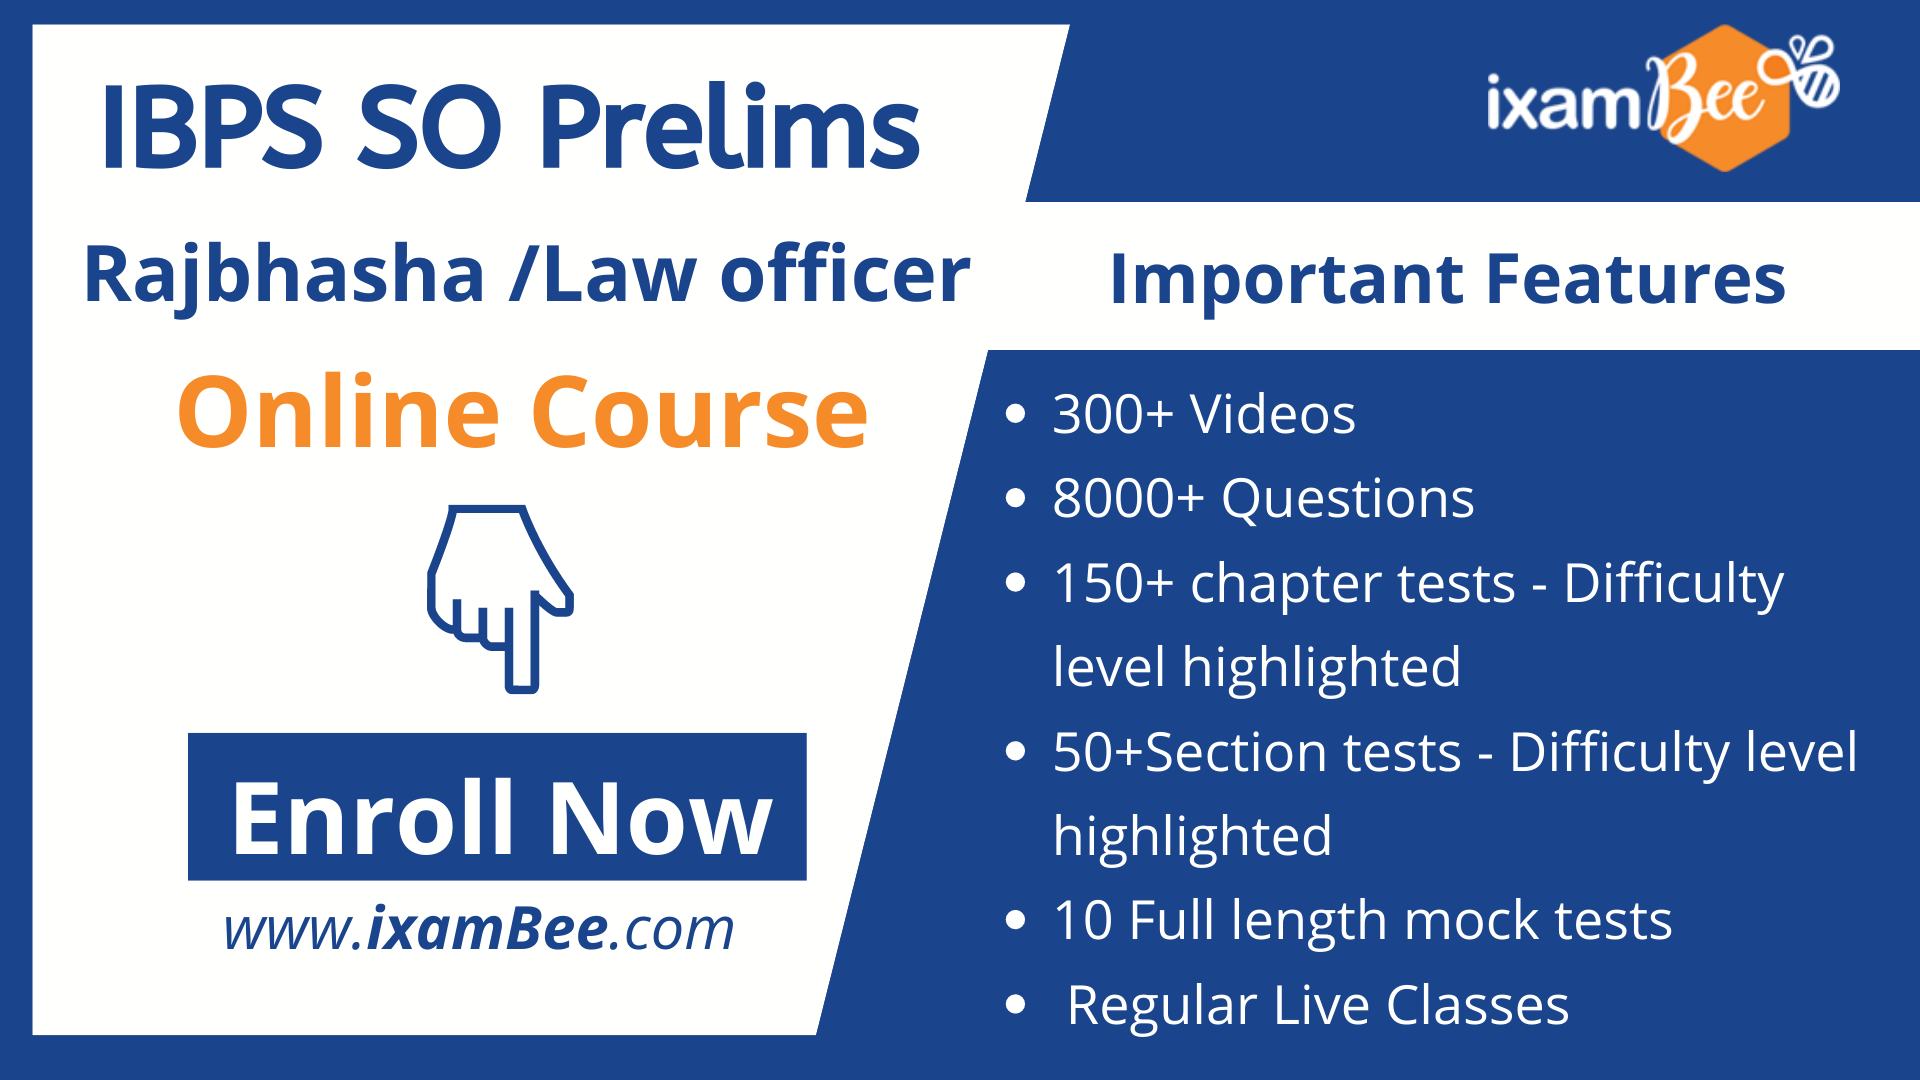 IBPS SO Prelims Online Course (Rajbhasha Adhikari/Law Officer)